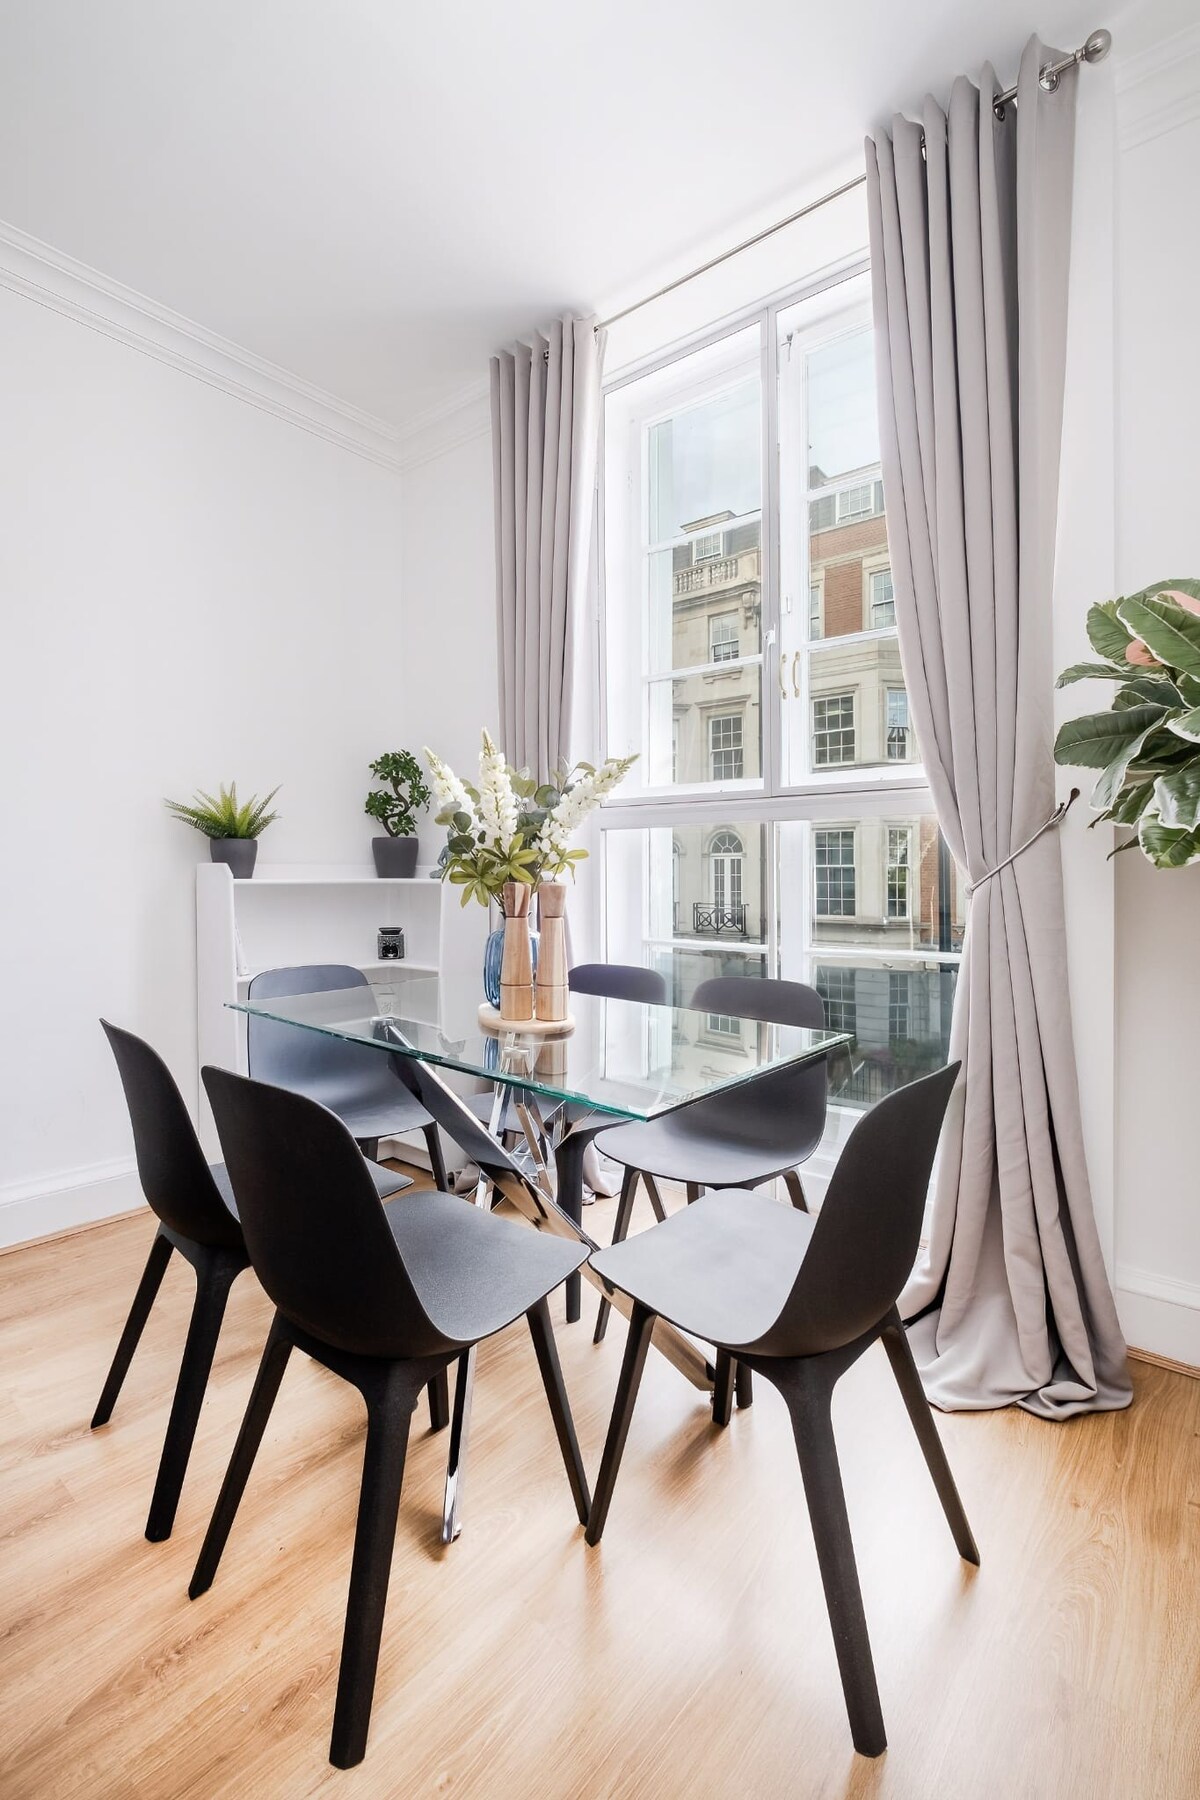 Prime London Living: 2-Bedroom Beautiful Apartment